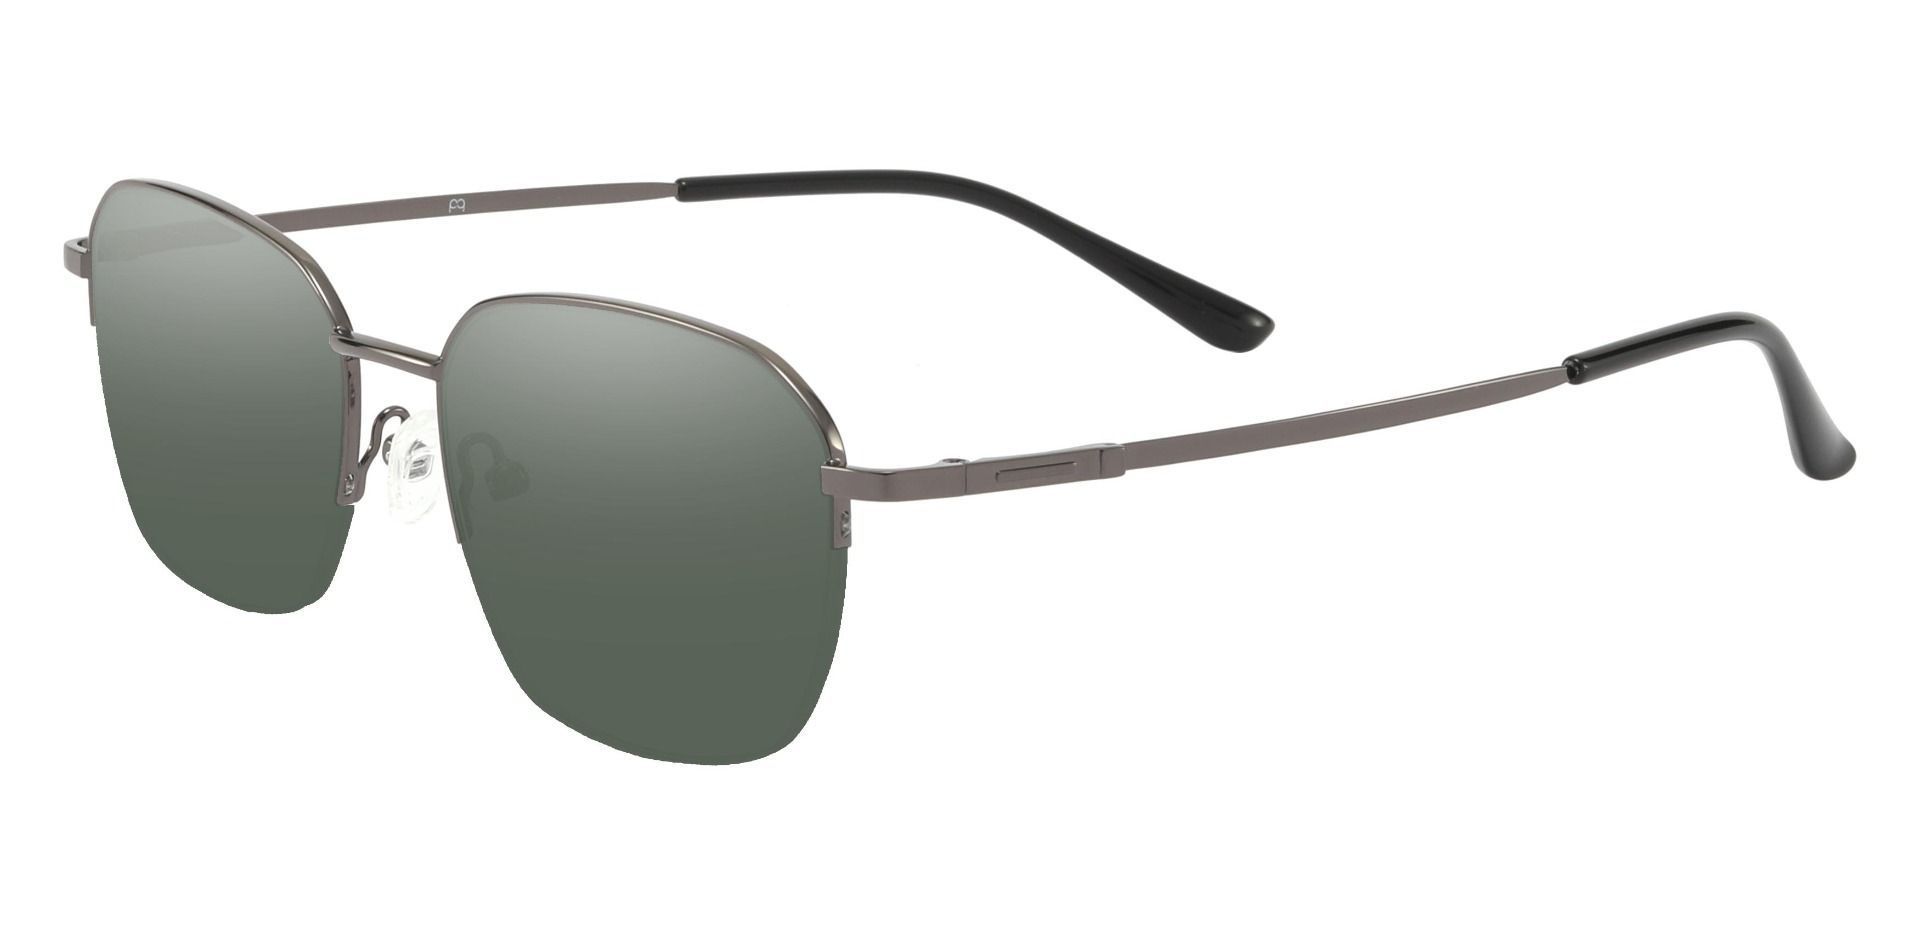 Wilton Geometric Progressive Sunglasses - Gray Frame With Green Lenses